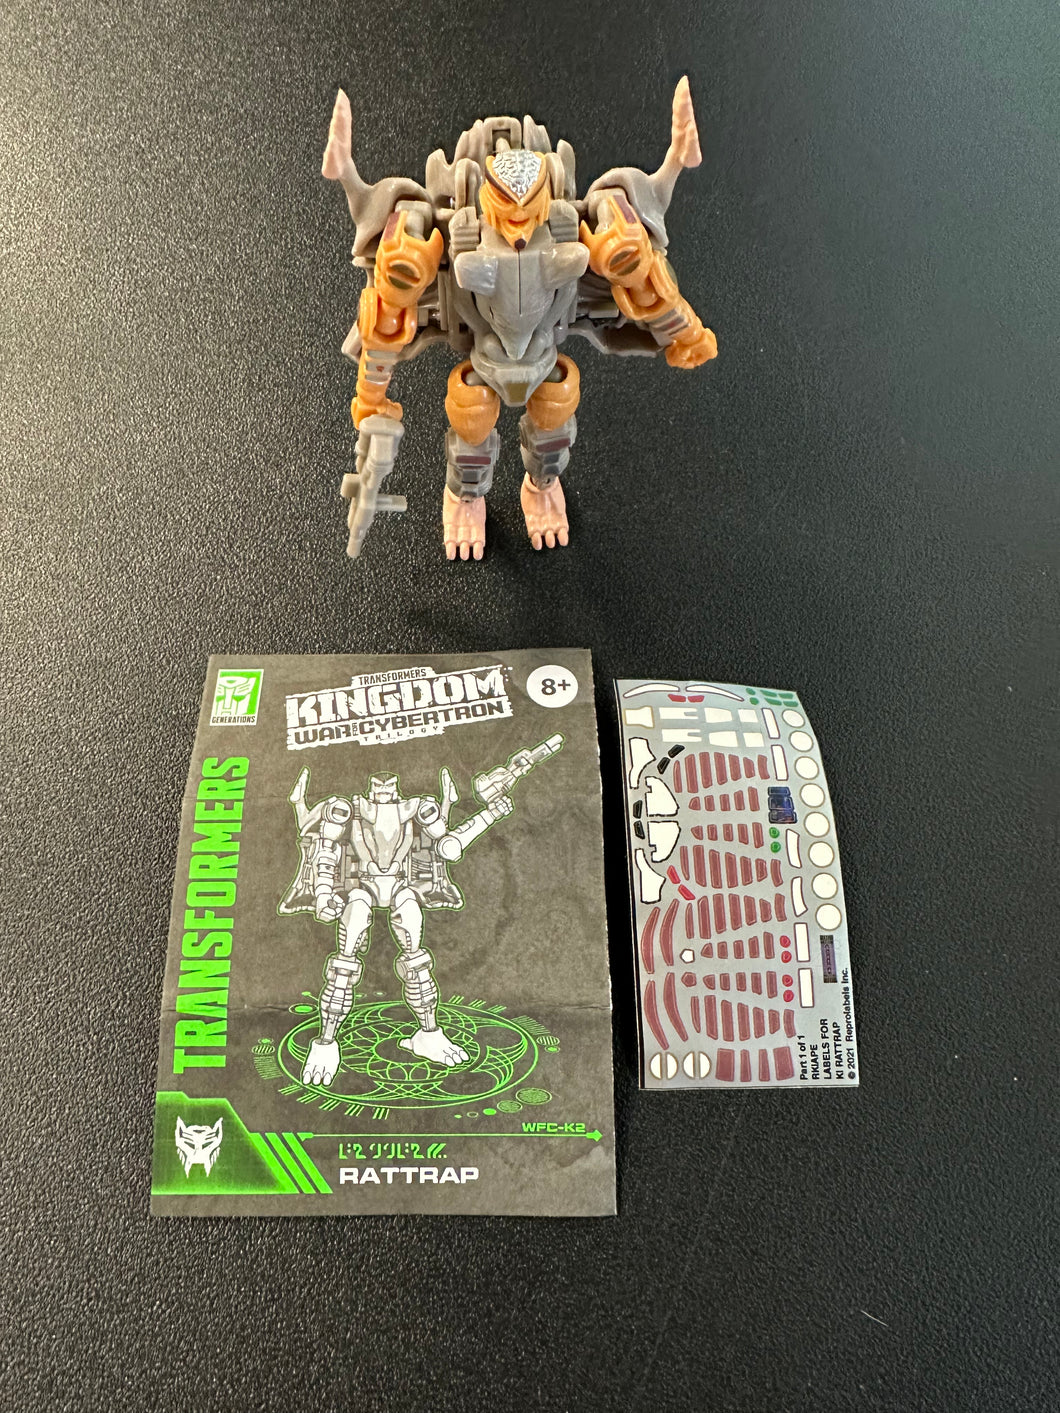 Hasbro Transformers Kingdom War for Cybertron Rattrap LOOSE Figure